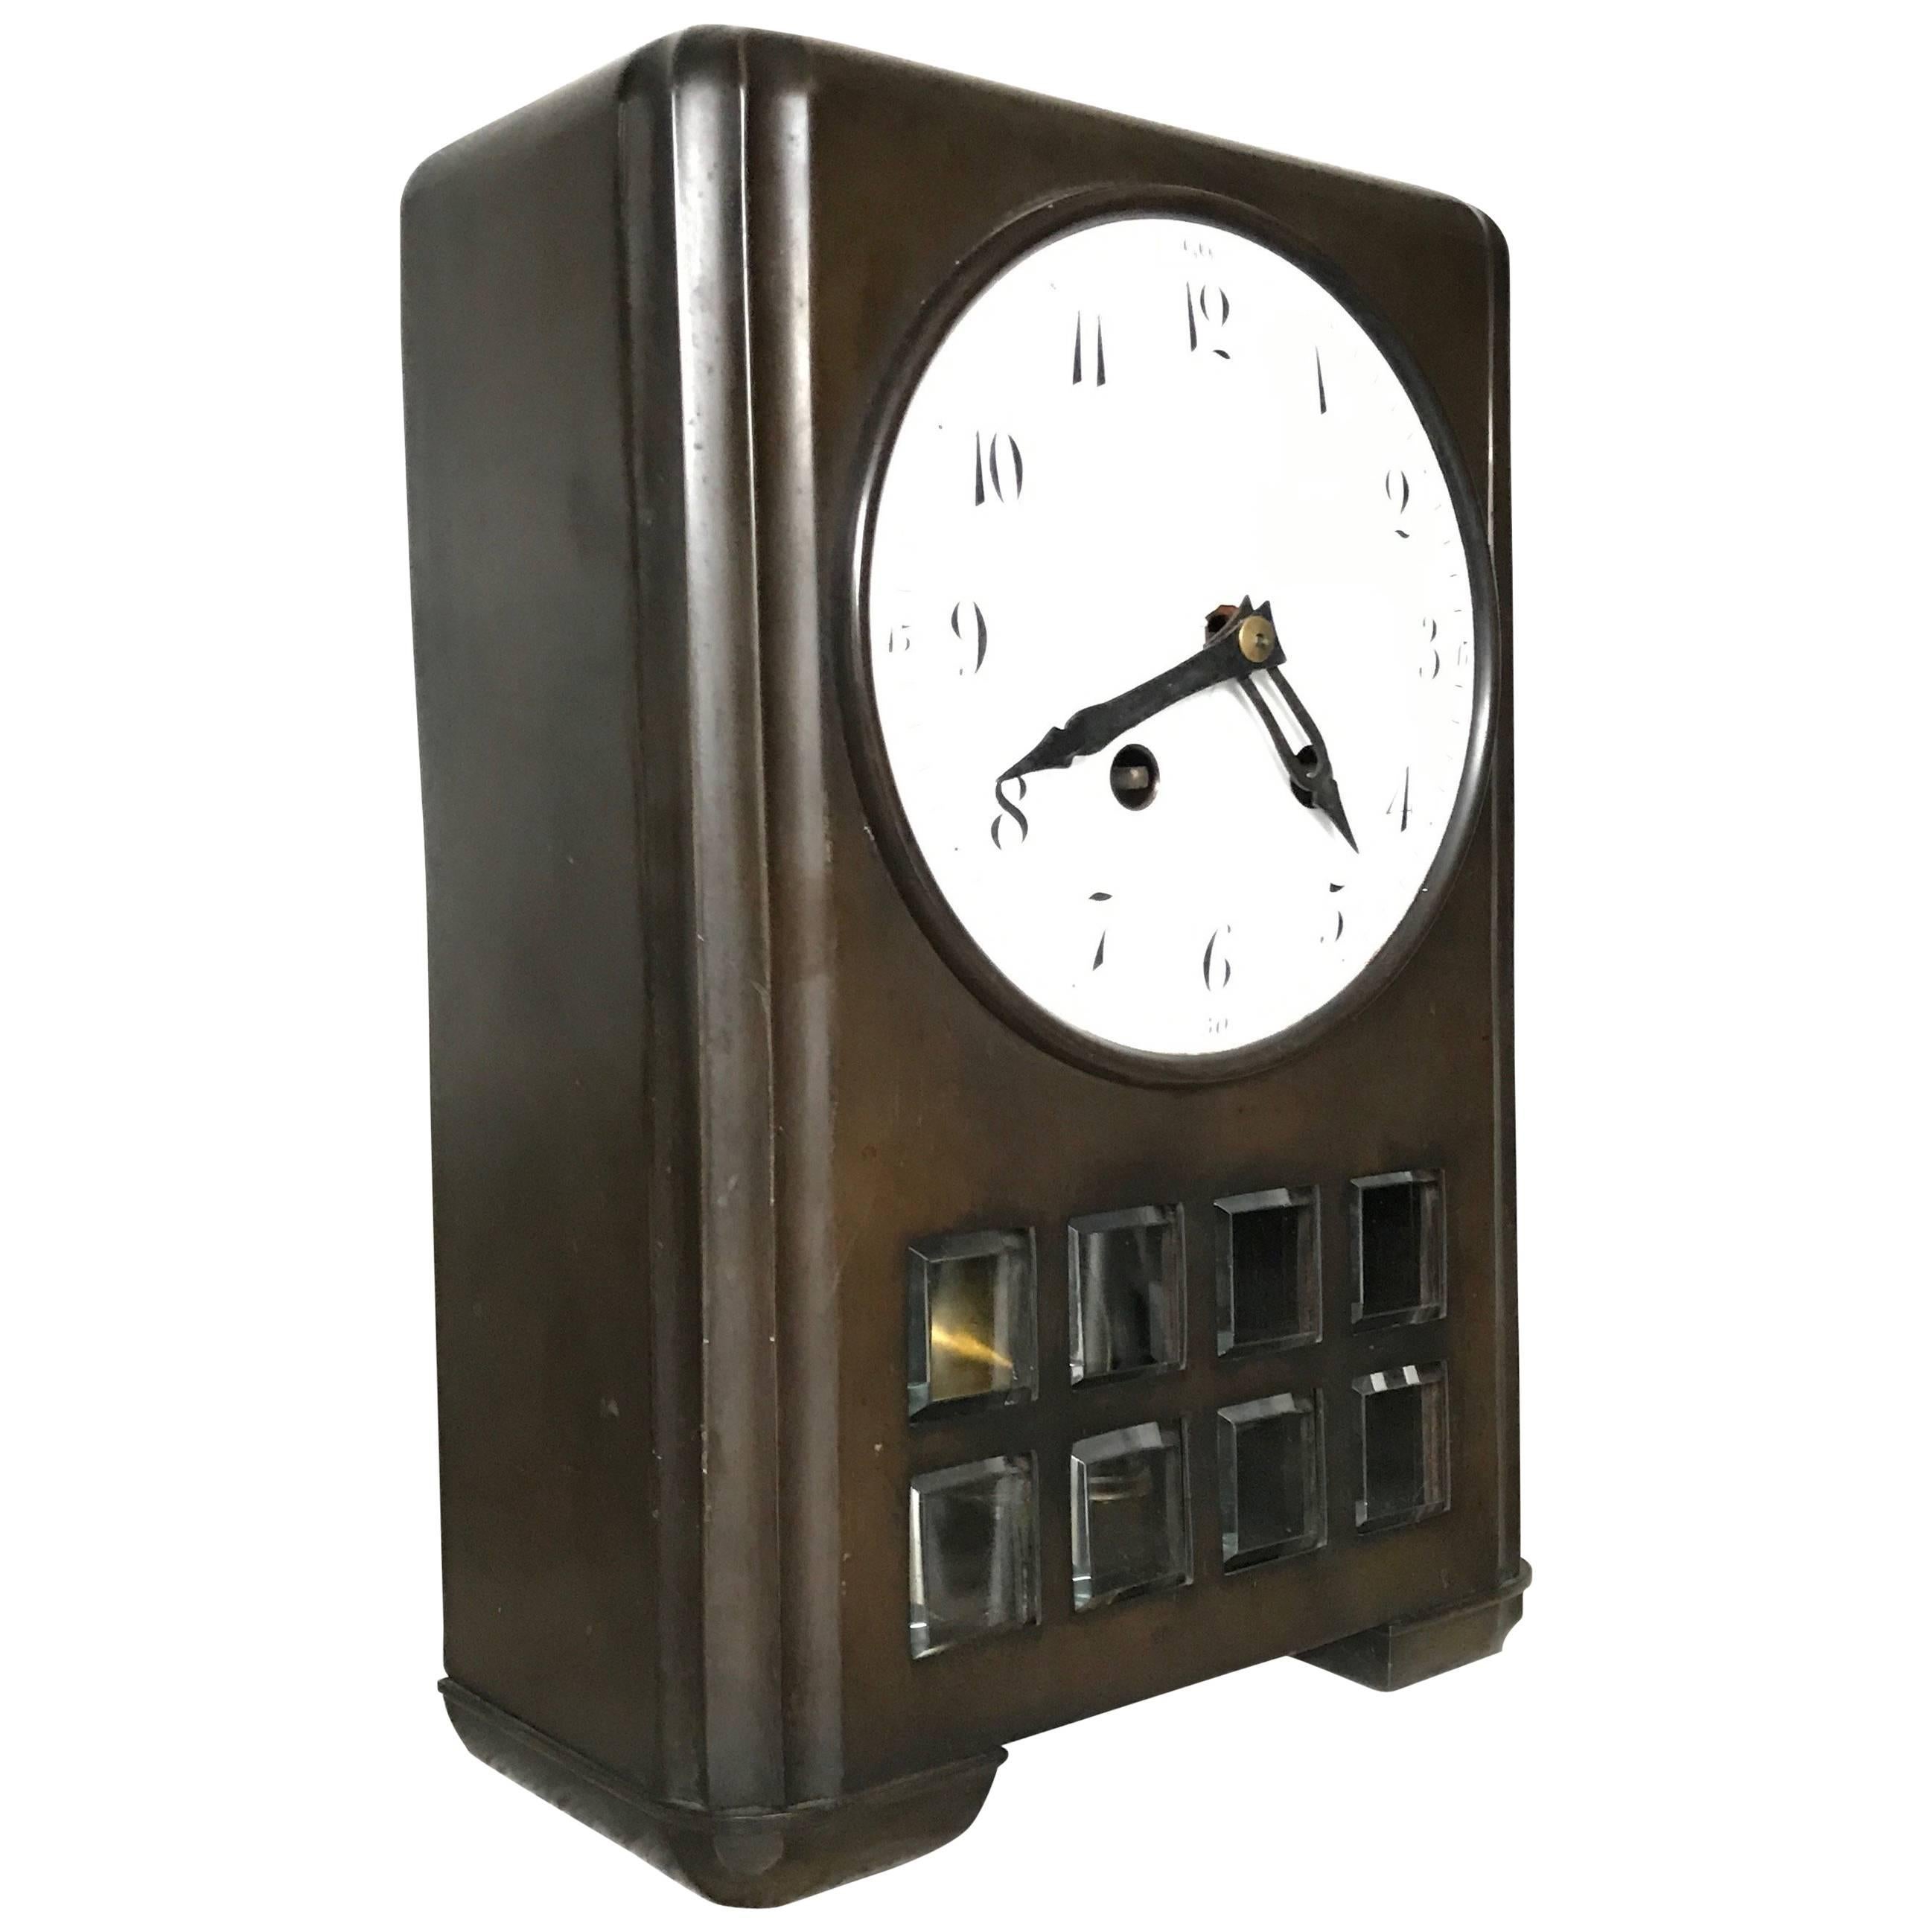 Rare Art Deco / Bauhaus Bronze Table or Mantel Clock by Lenzkirch / C.Kühling